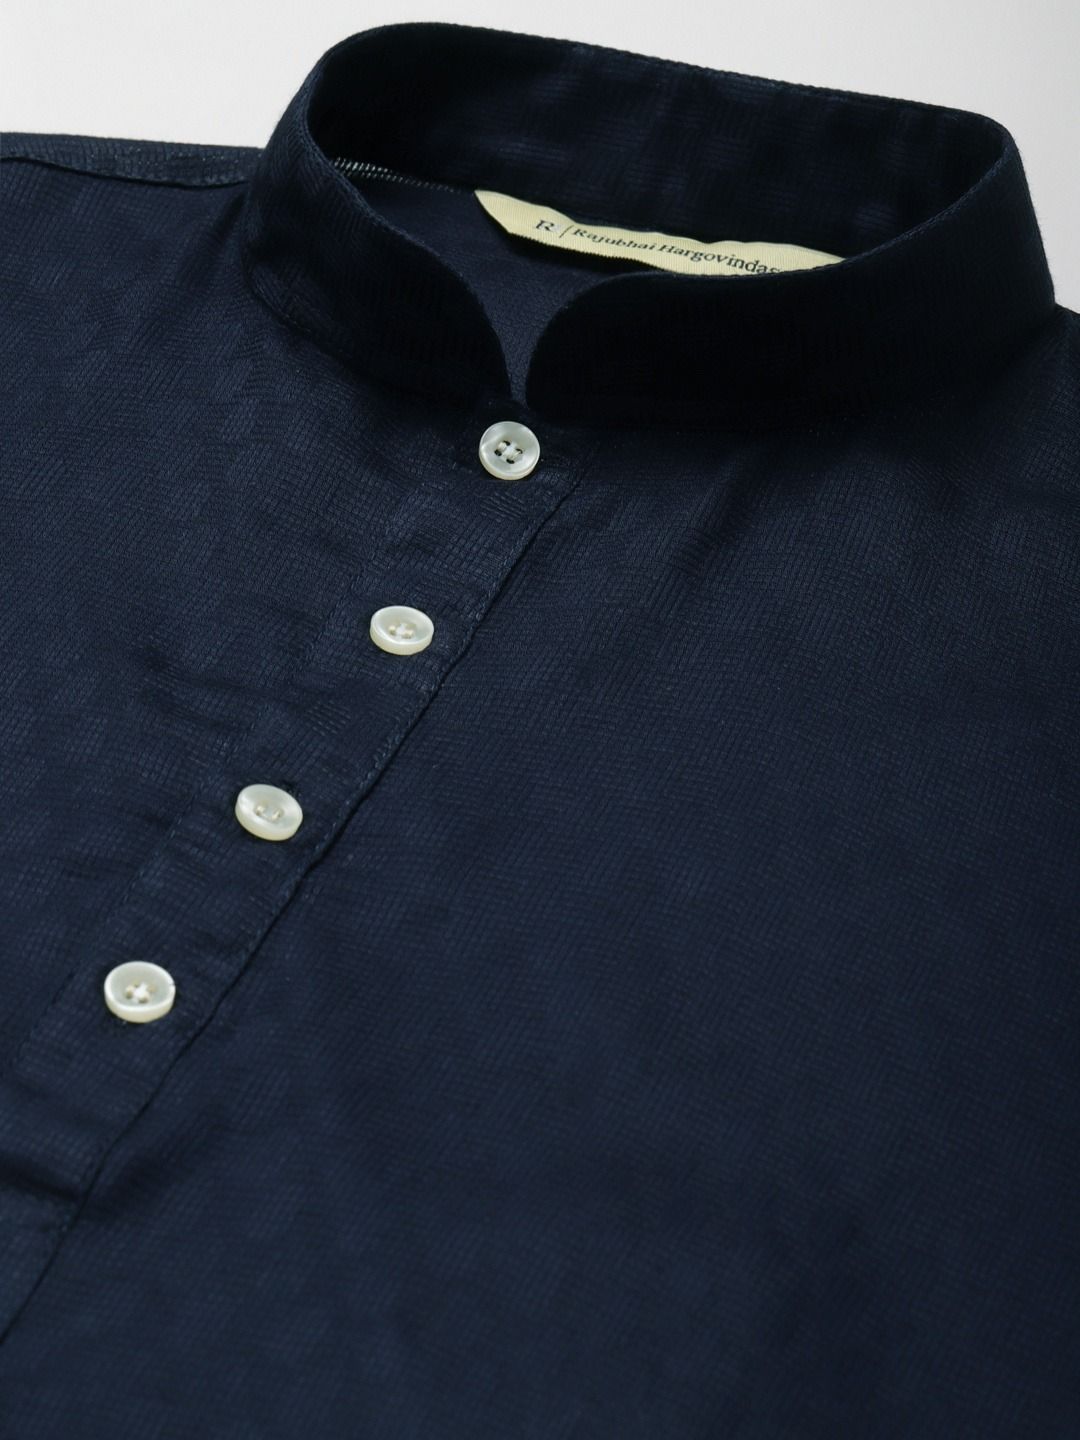 Navy Blue Woven Self Design Premium Cotton Kurta for Men Online ...